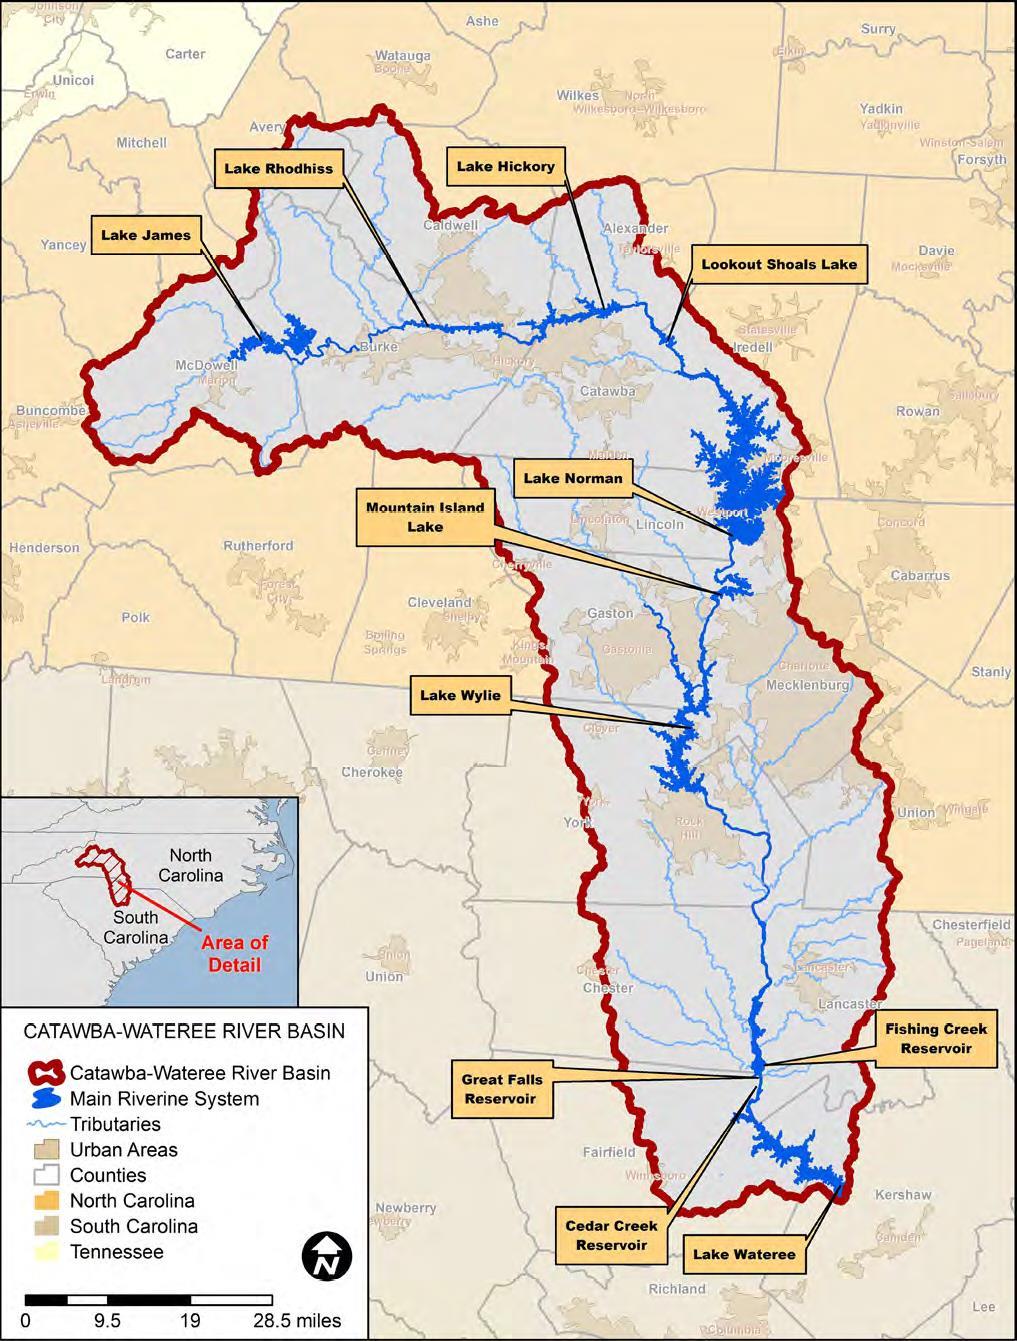 Catawba-Wateree River Basin 11 reservoirs Managed by Duke Energy